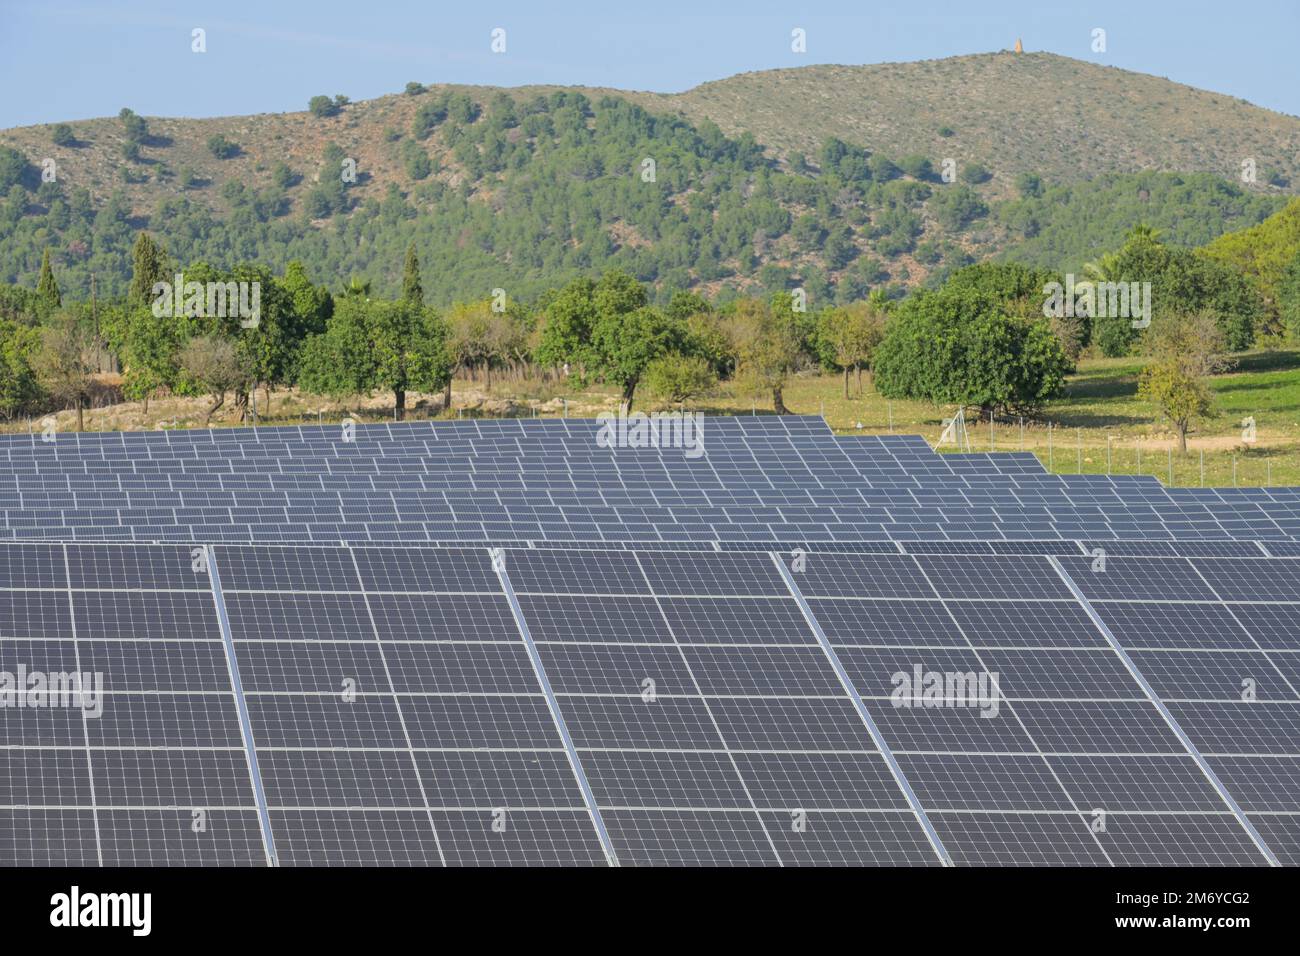 Photovlaisches Solarfeld bei Capdepera, Mallorca, Spanien Foto Stock